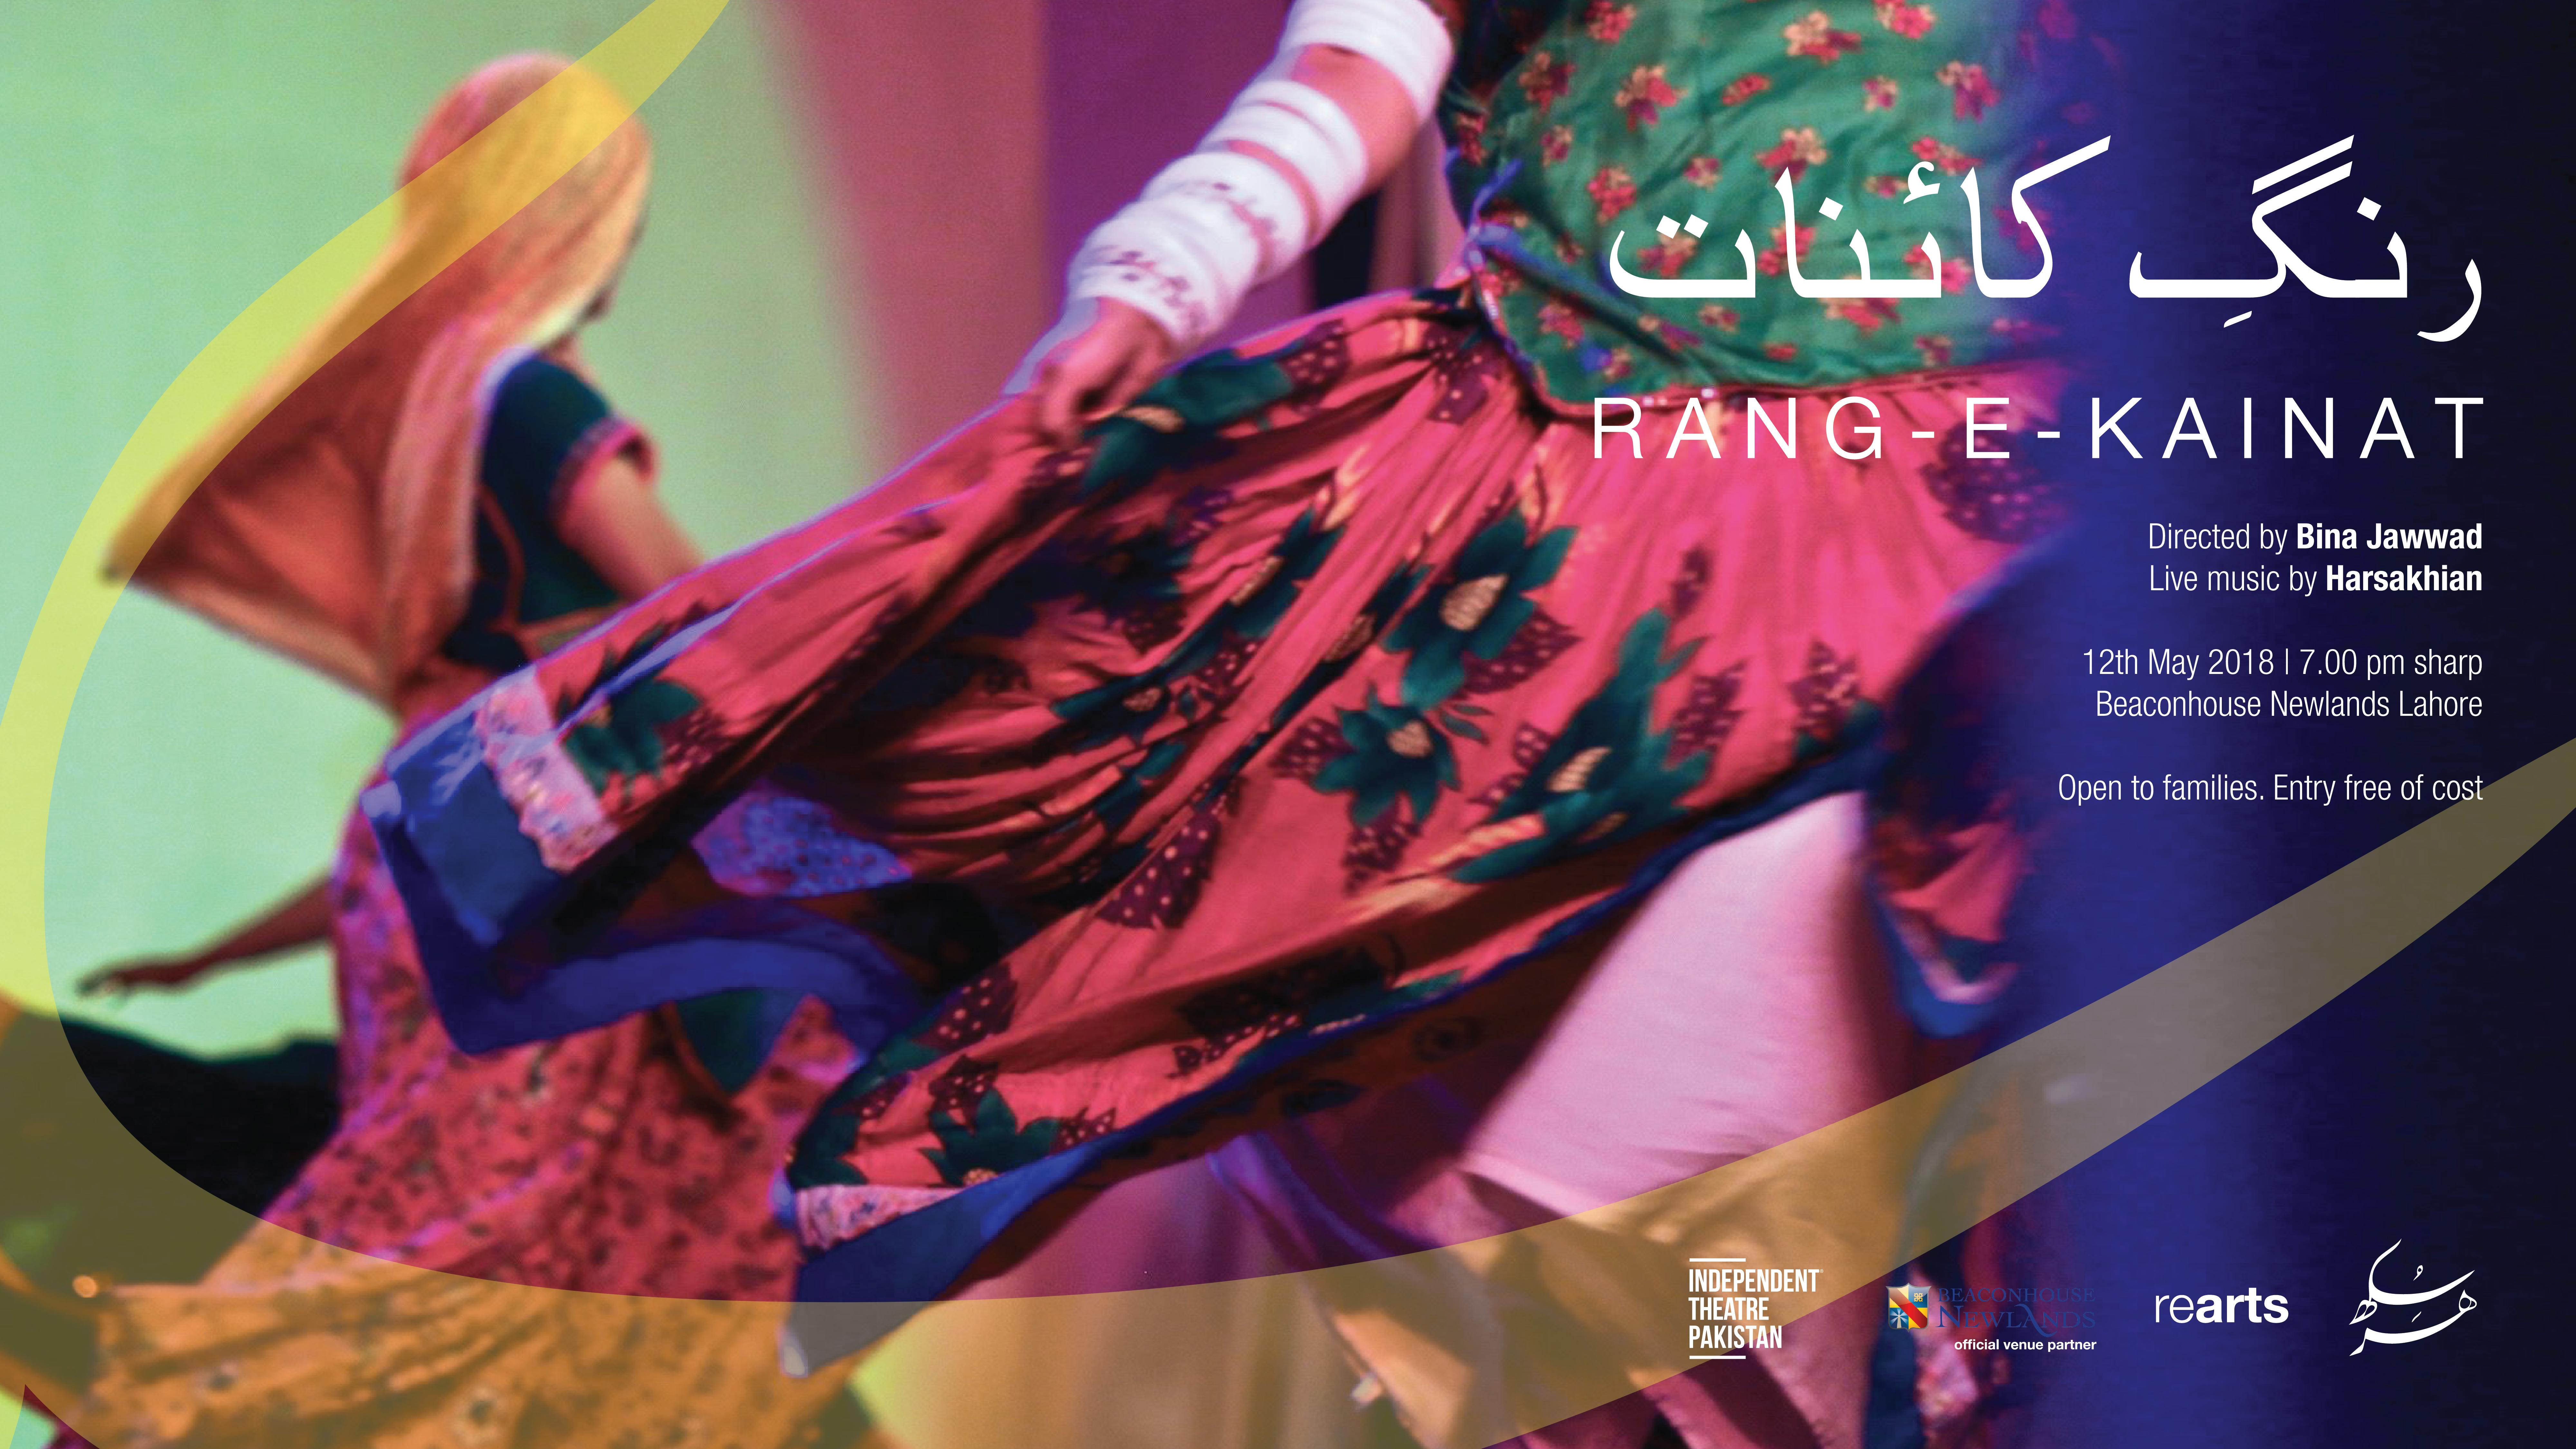 Rang-e-Kainat - a musical performance by Harsukh